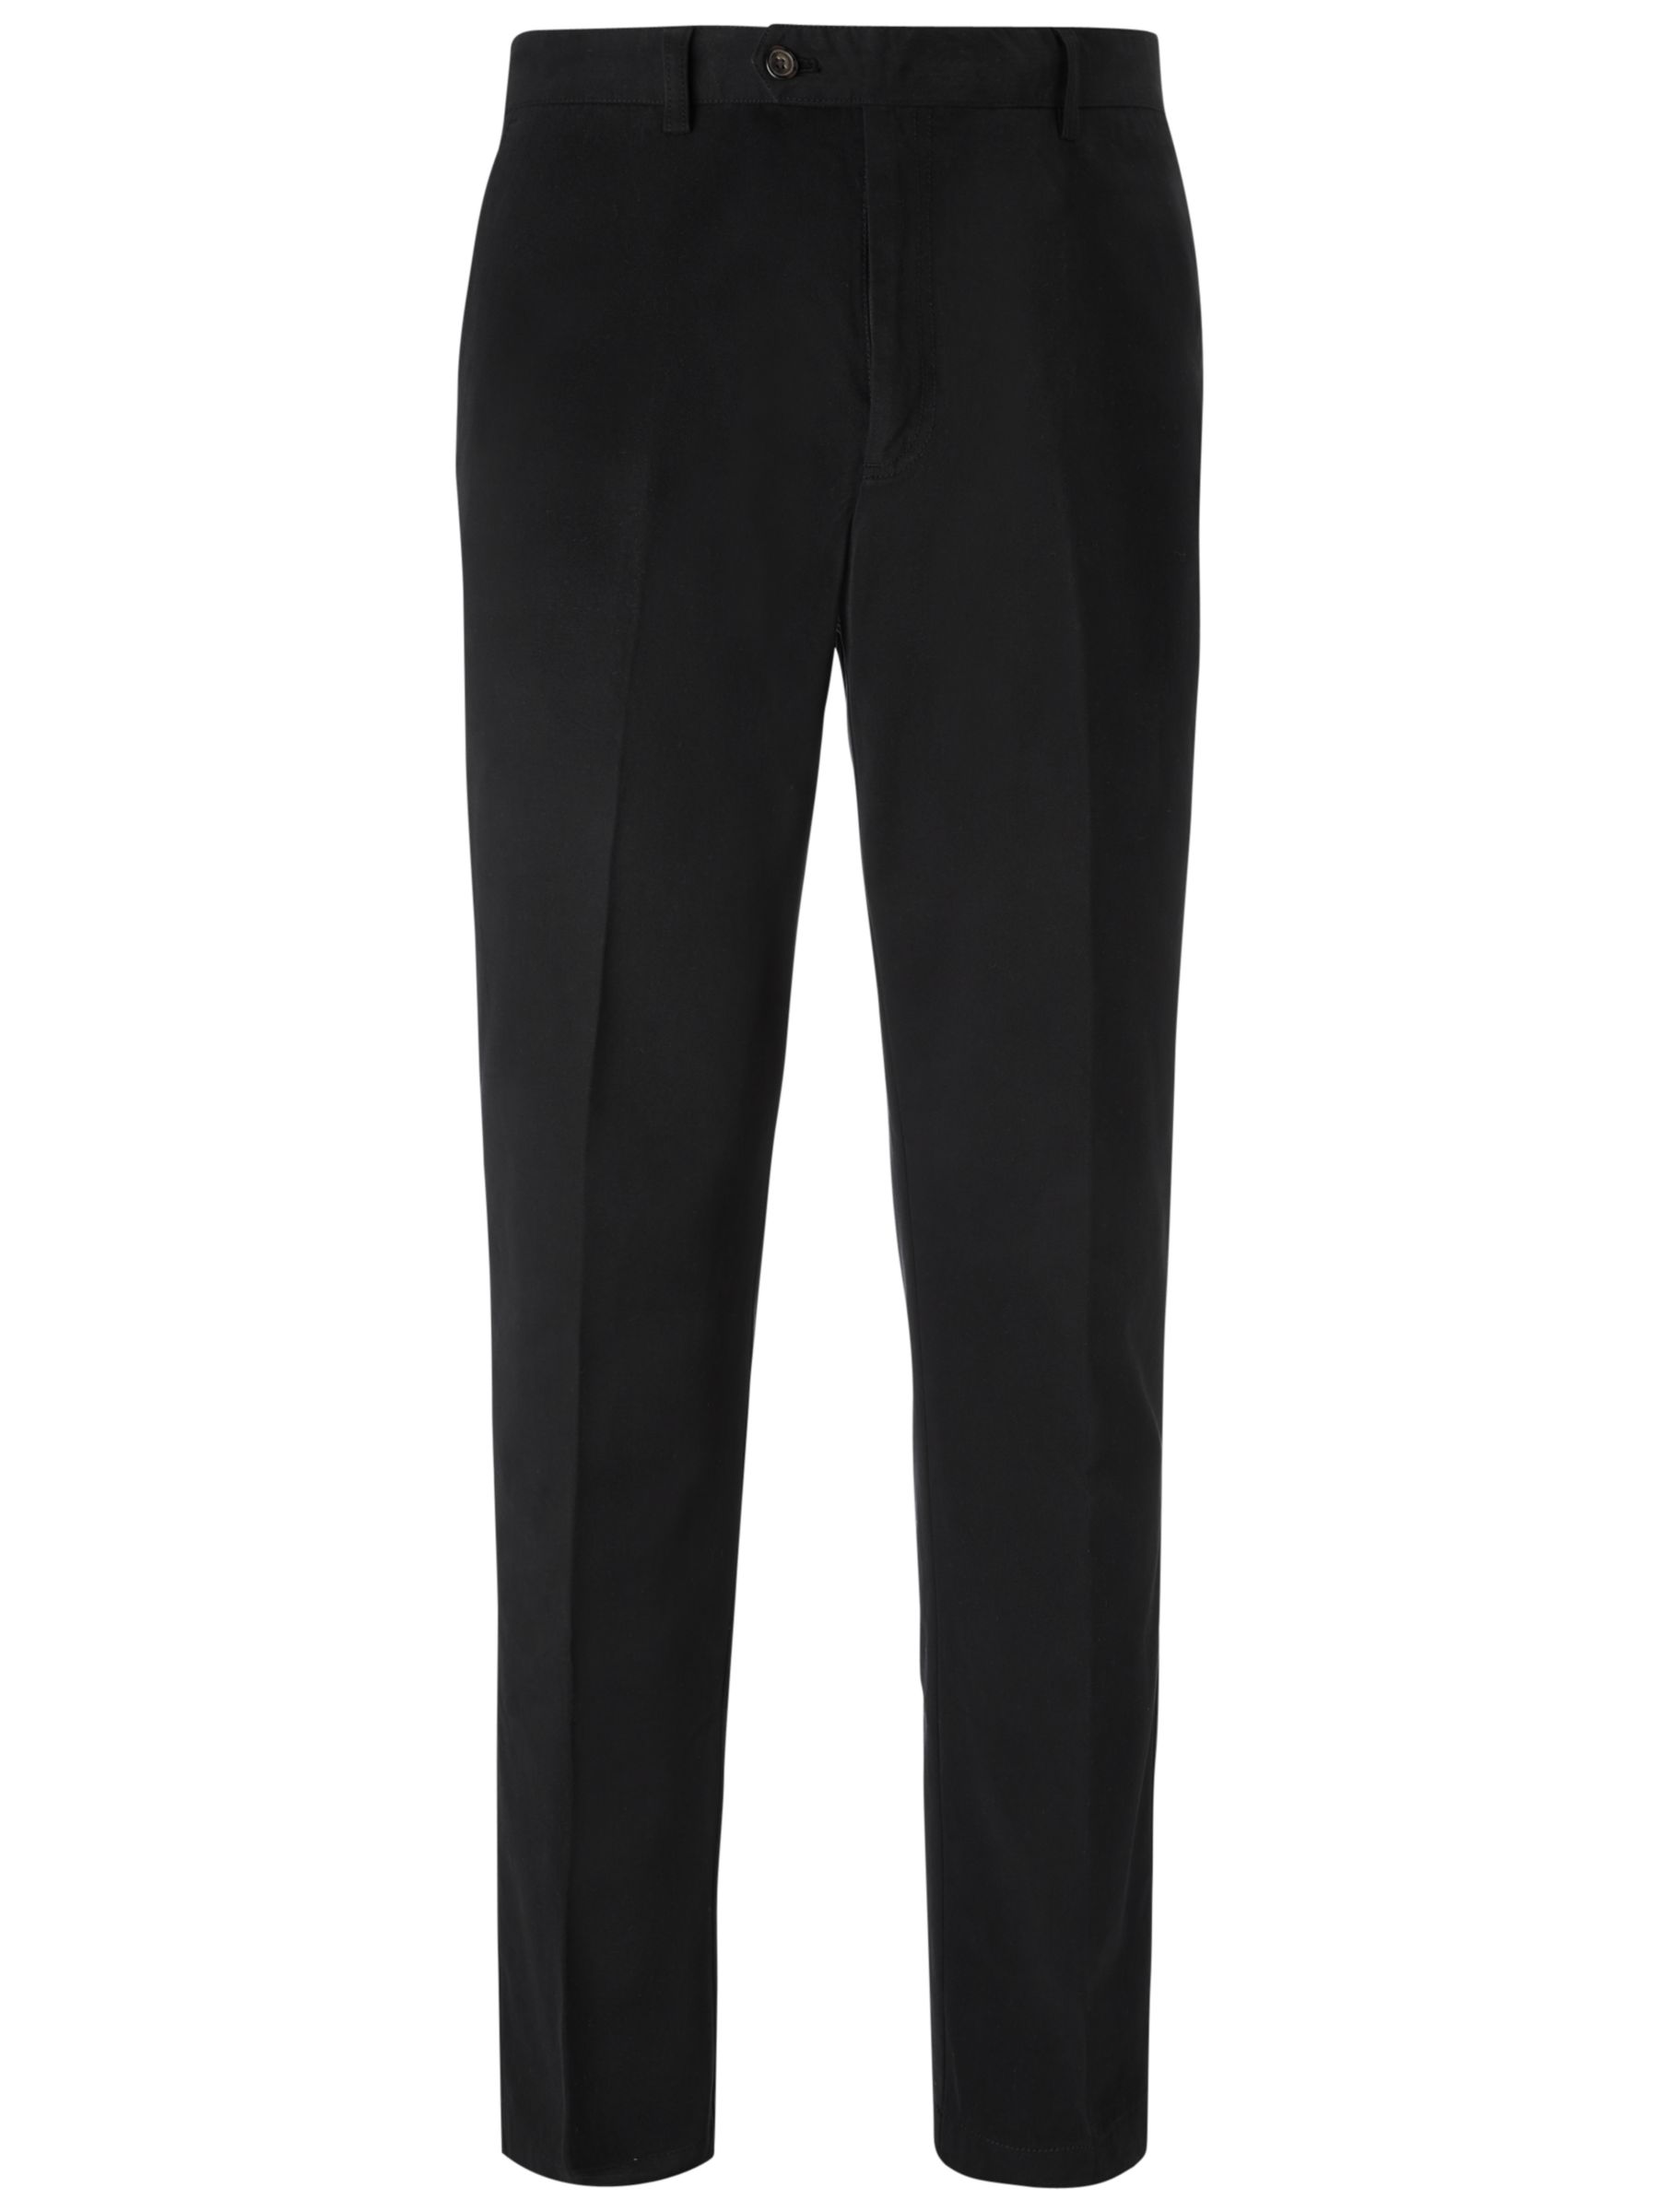 John Lewis & Partners Wrinkle Free Flat Front Trousers, Black, 30R